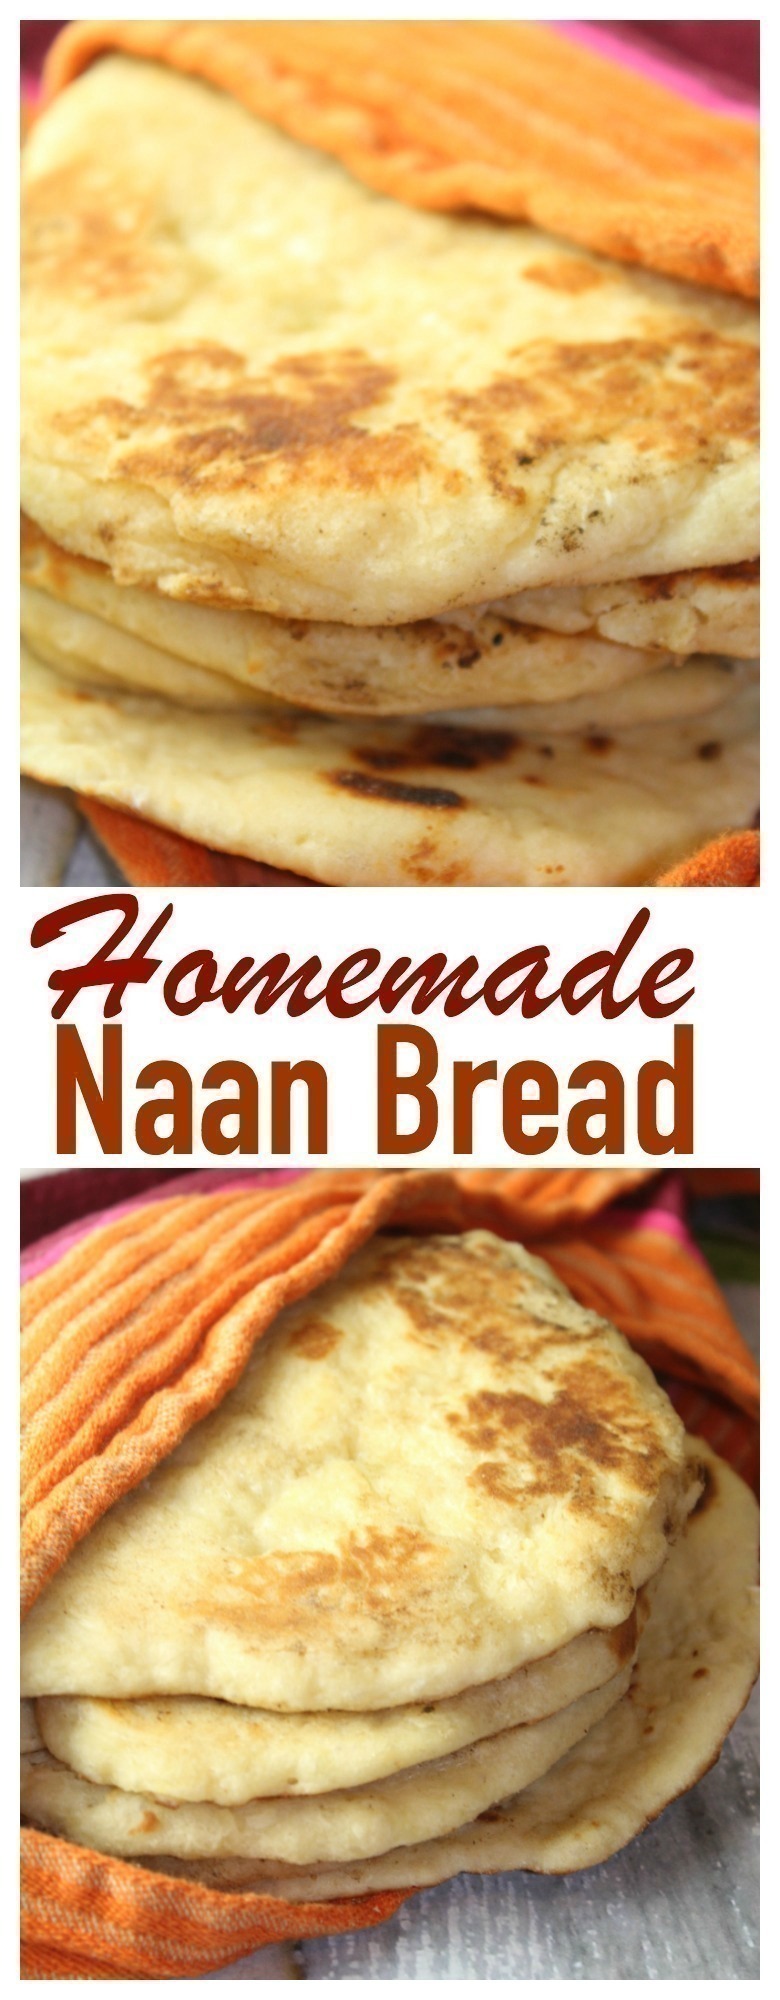 Homemade Naan Bread